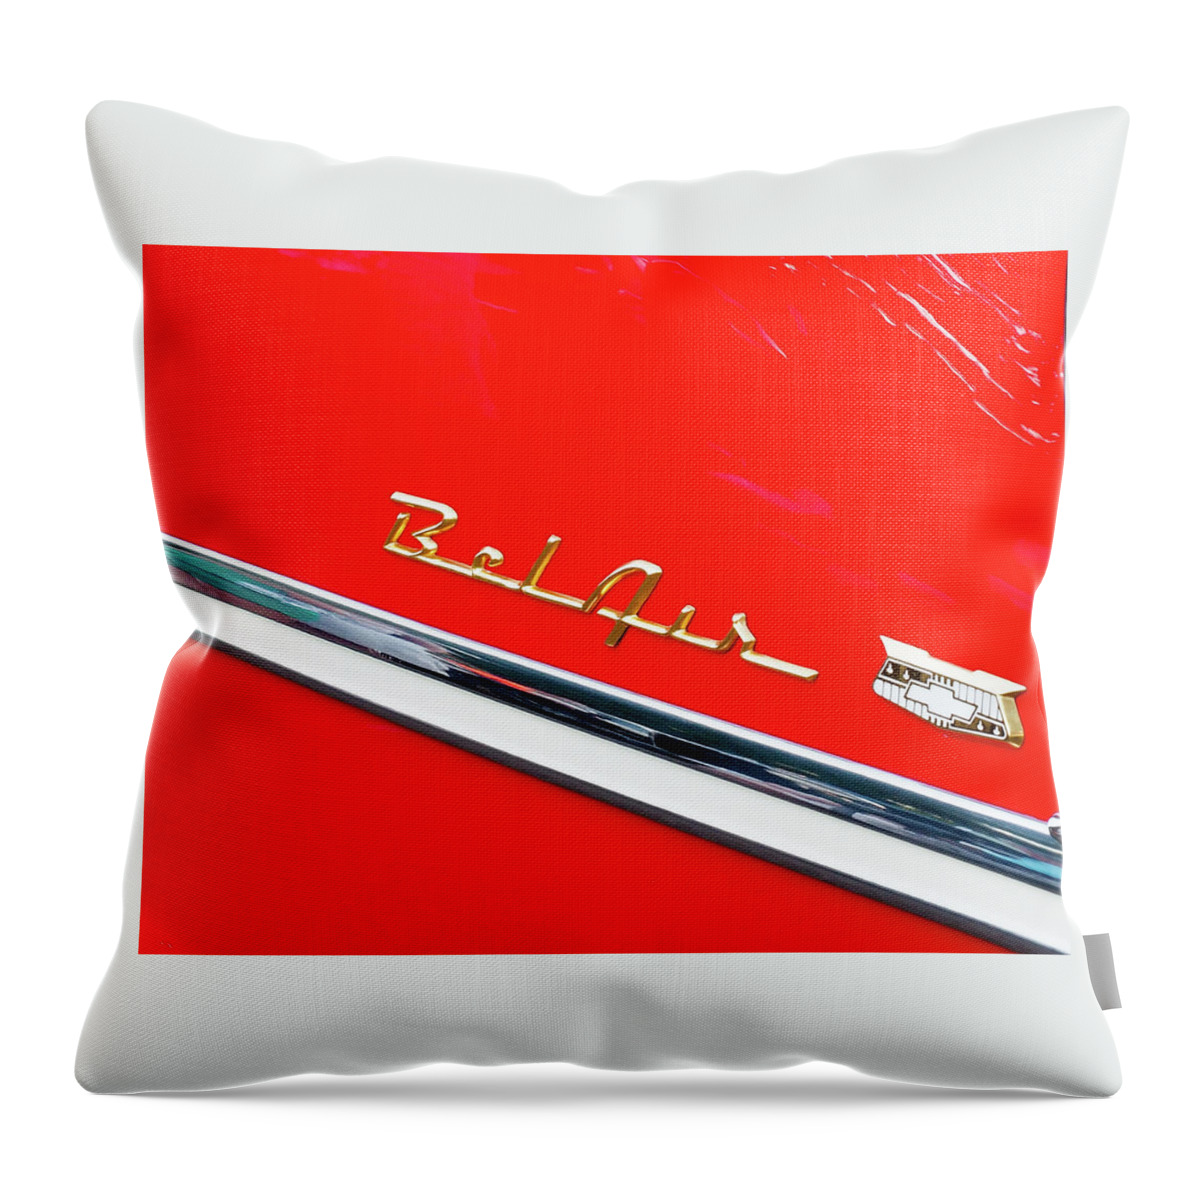 Bel Air Throw Pillow featuring the photograph Bel Air Chevrolet Emblem by James C Richardson